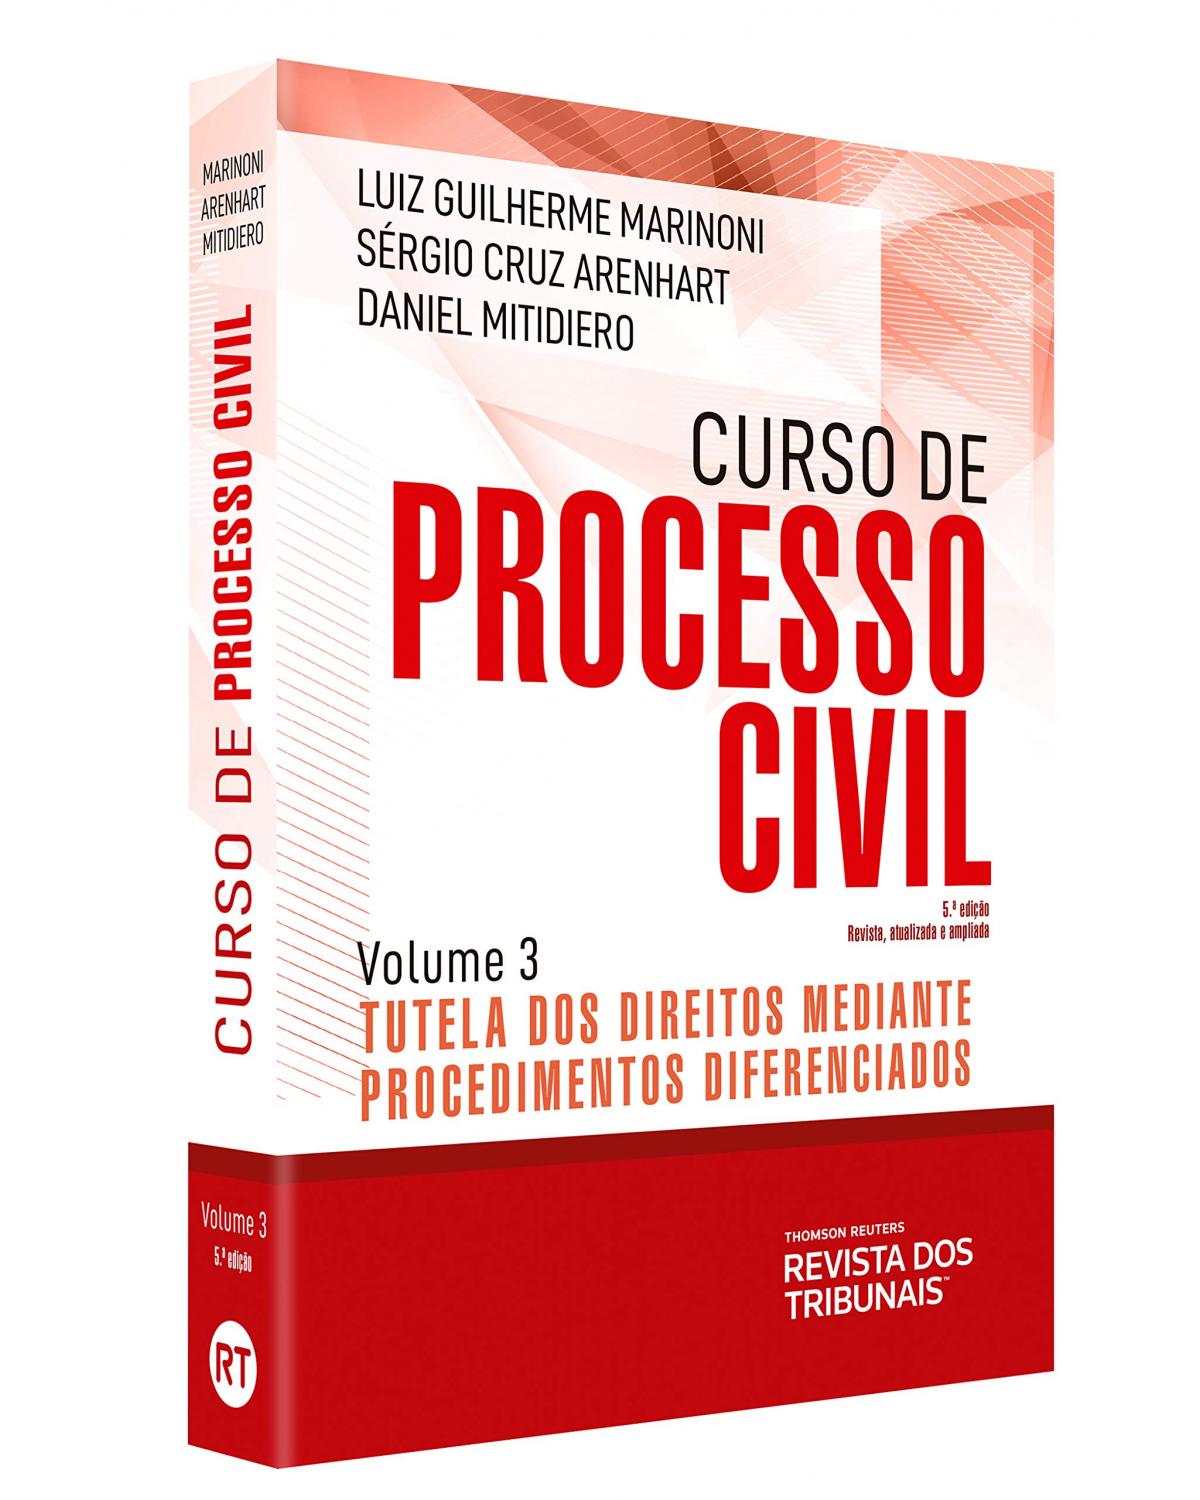 Curso de Processo Civil - Volume 3 - Tutela dos Direitos Mediante Procedimentos Diferenciados